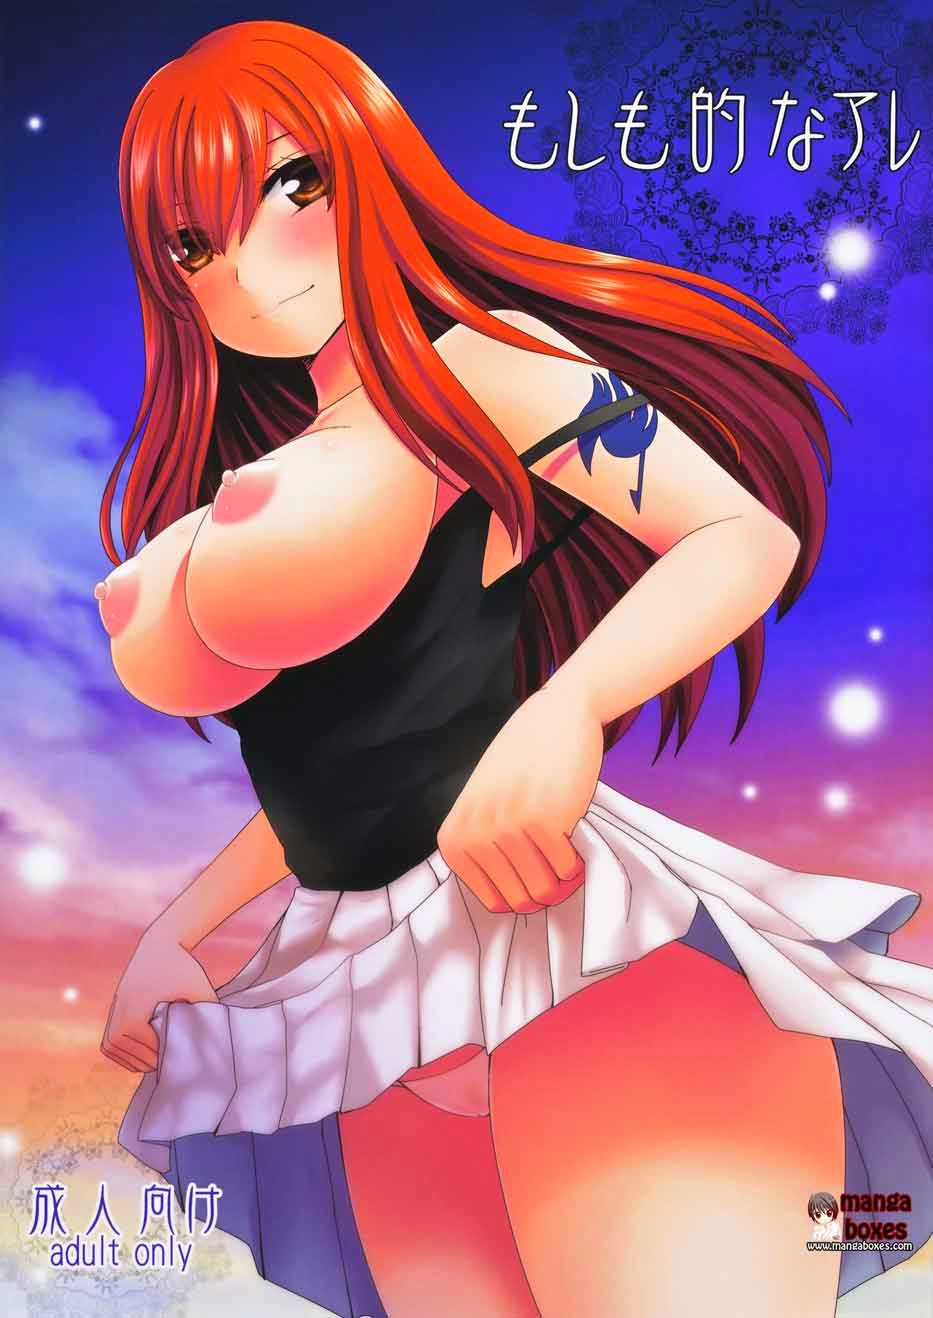 Anime Manga Fairy Tail Porn - Komik dewasa Fairy tail jelal x erza hentai xxx manga 17+